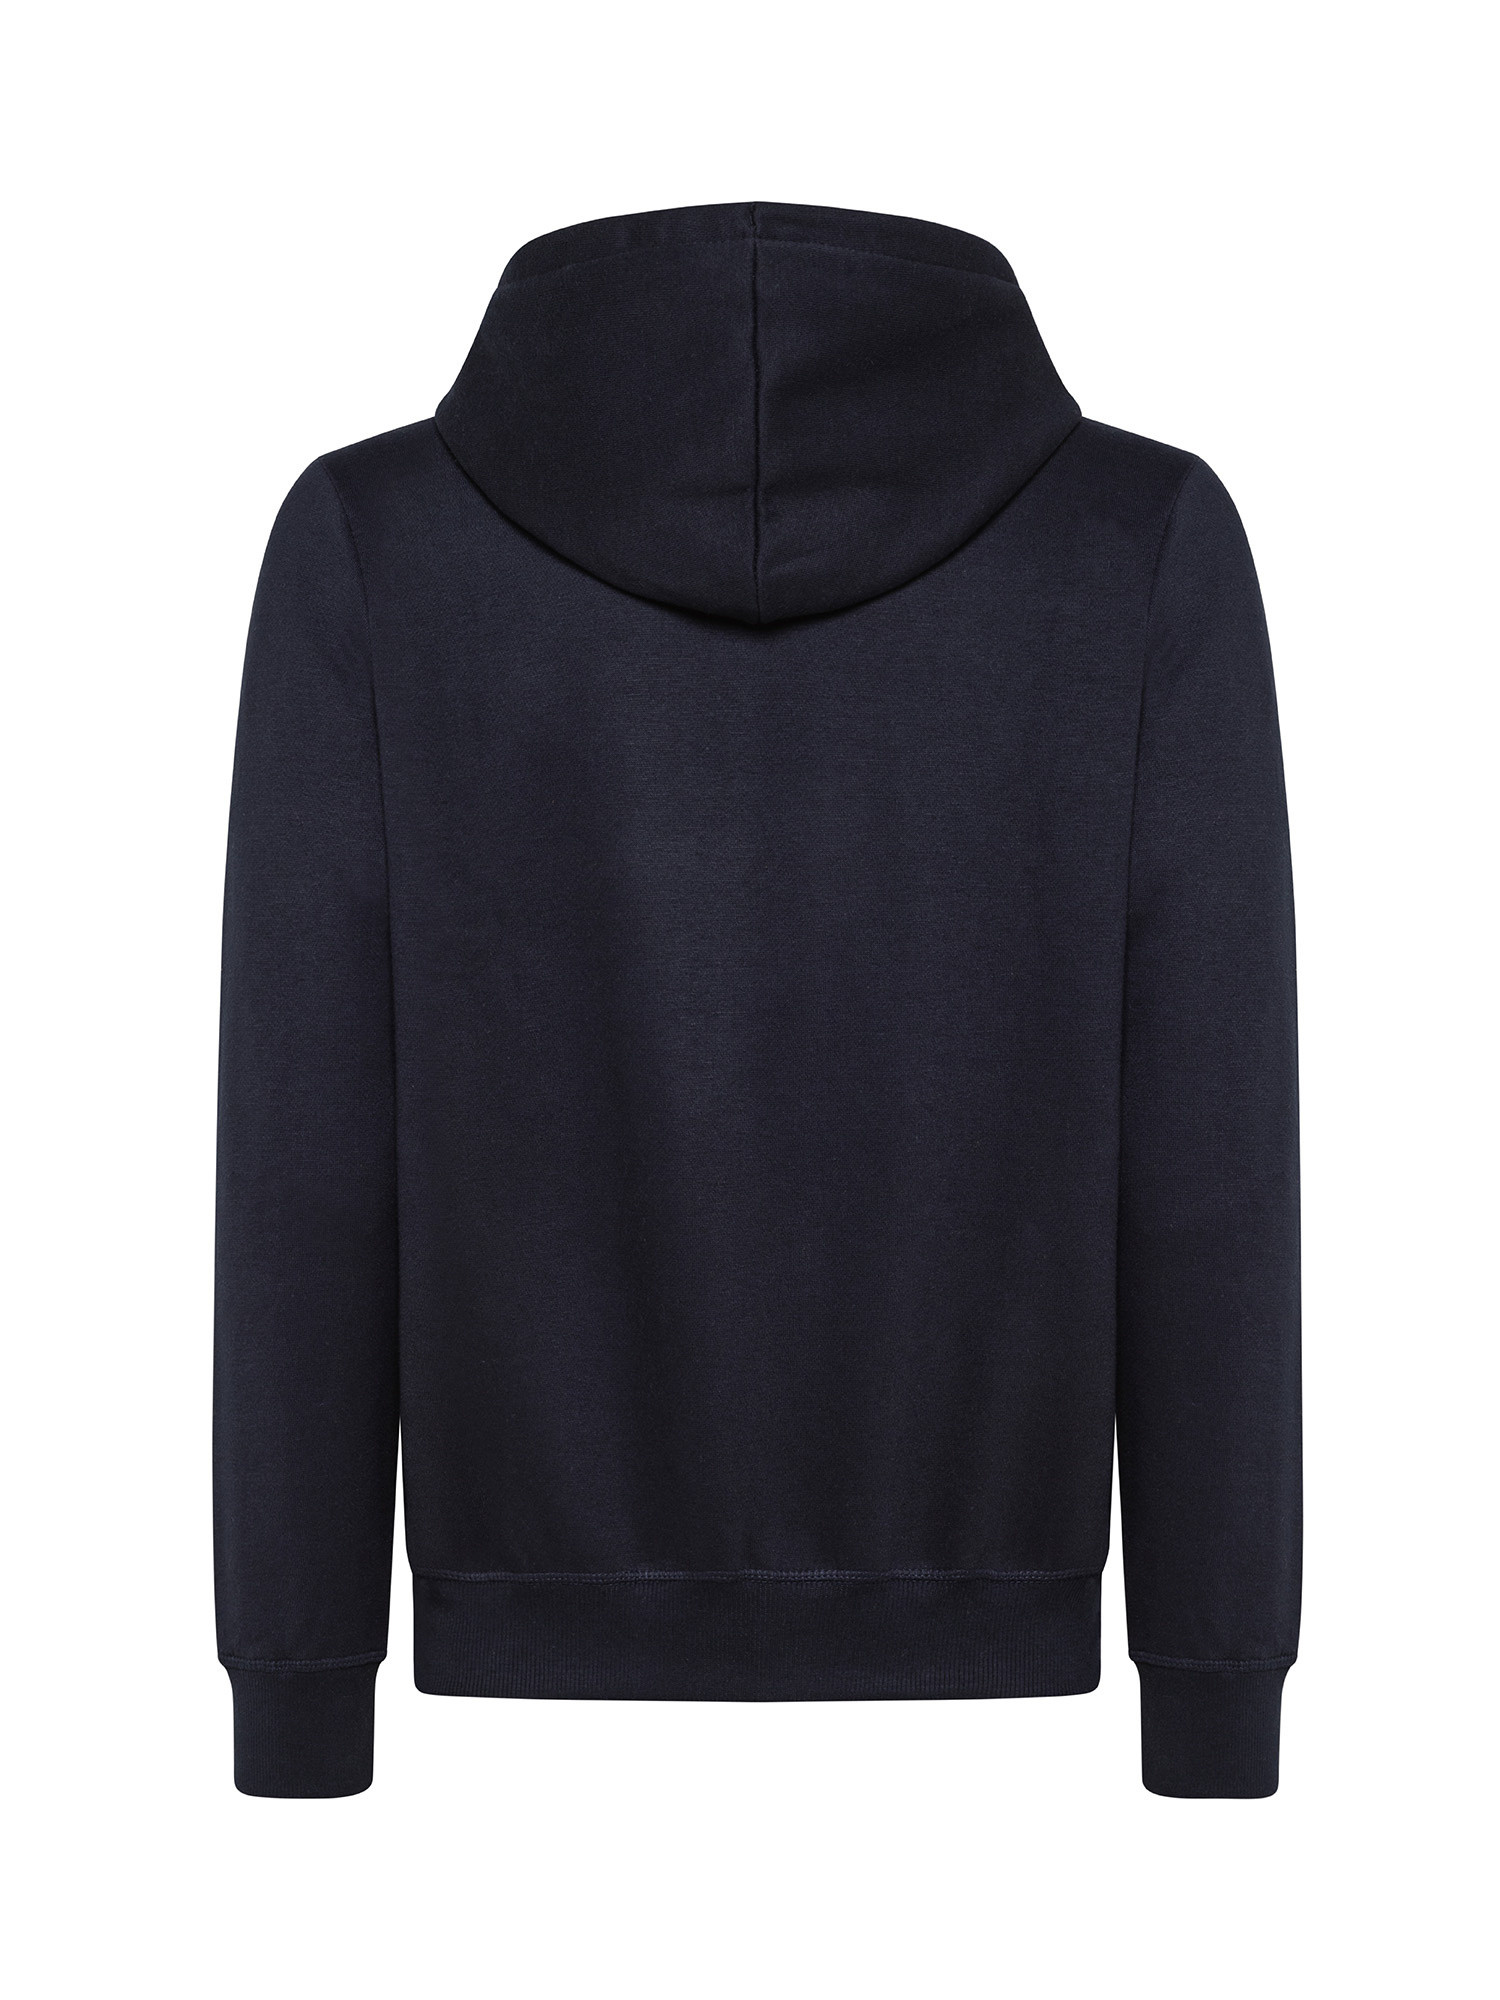 JCT - Hooded sweatshirt with print, Dark Blue, large image number 1